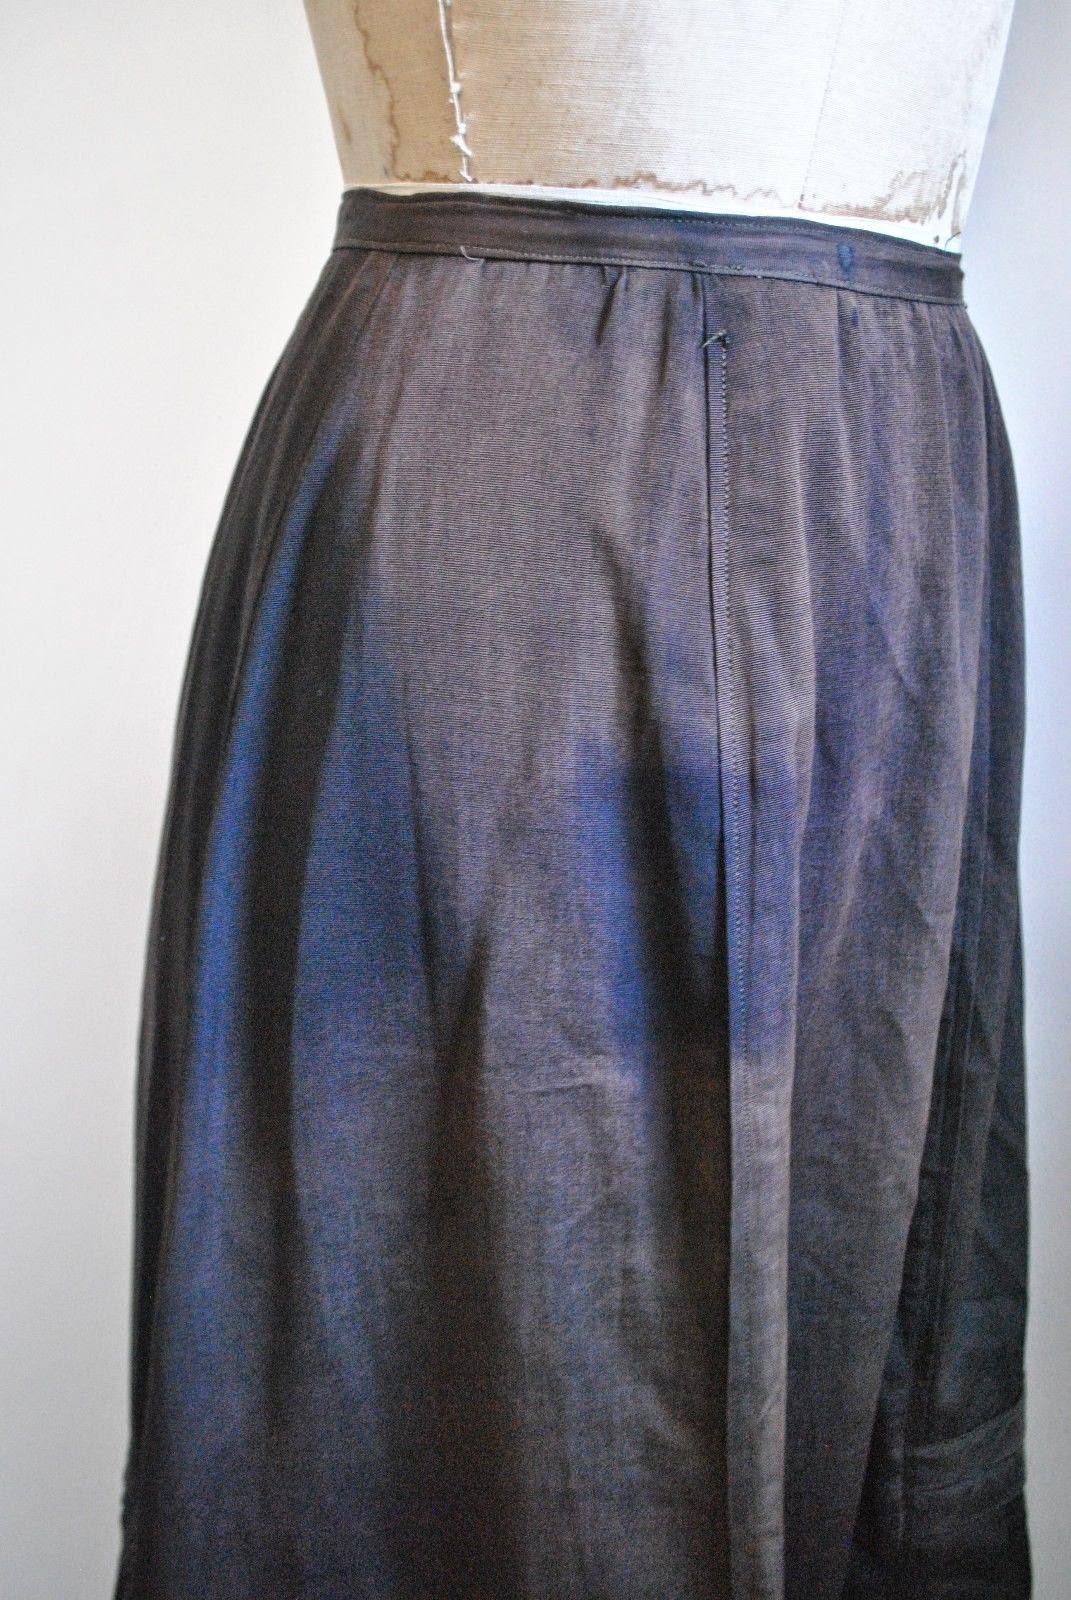 All The Pretty Dresses: Black Edwardian Shirtwaist and matching Skirt